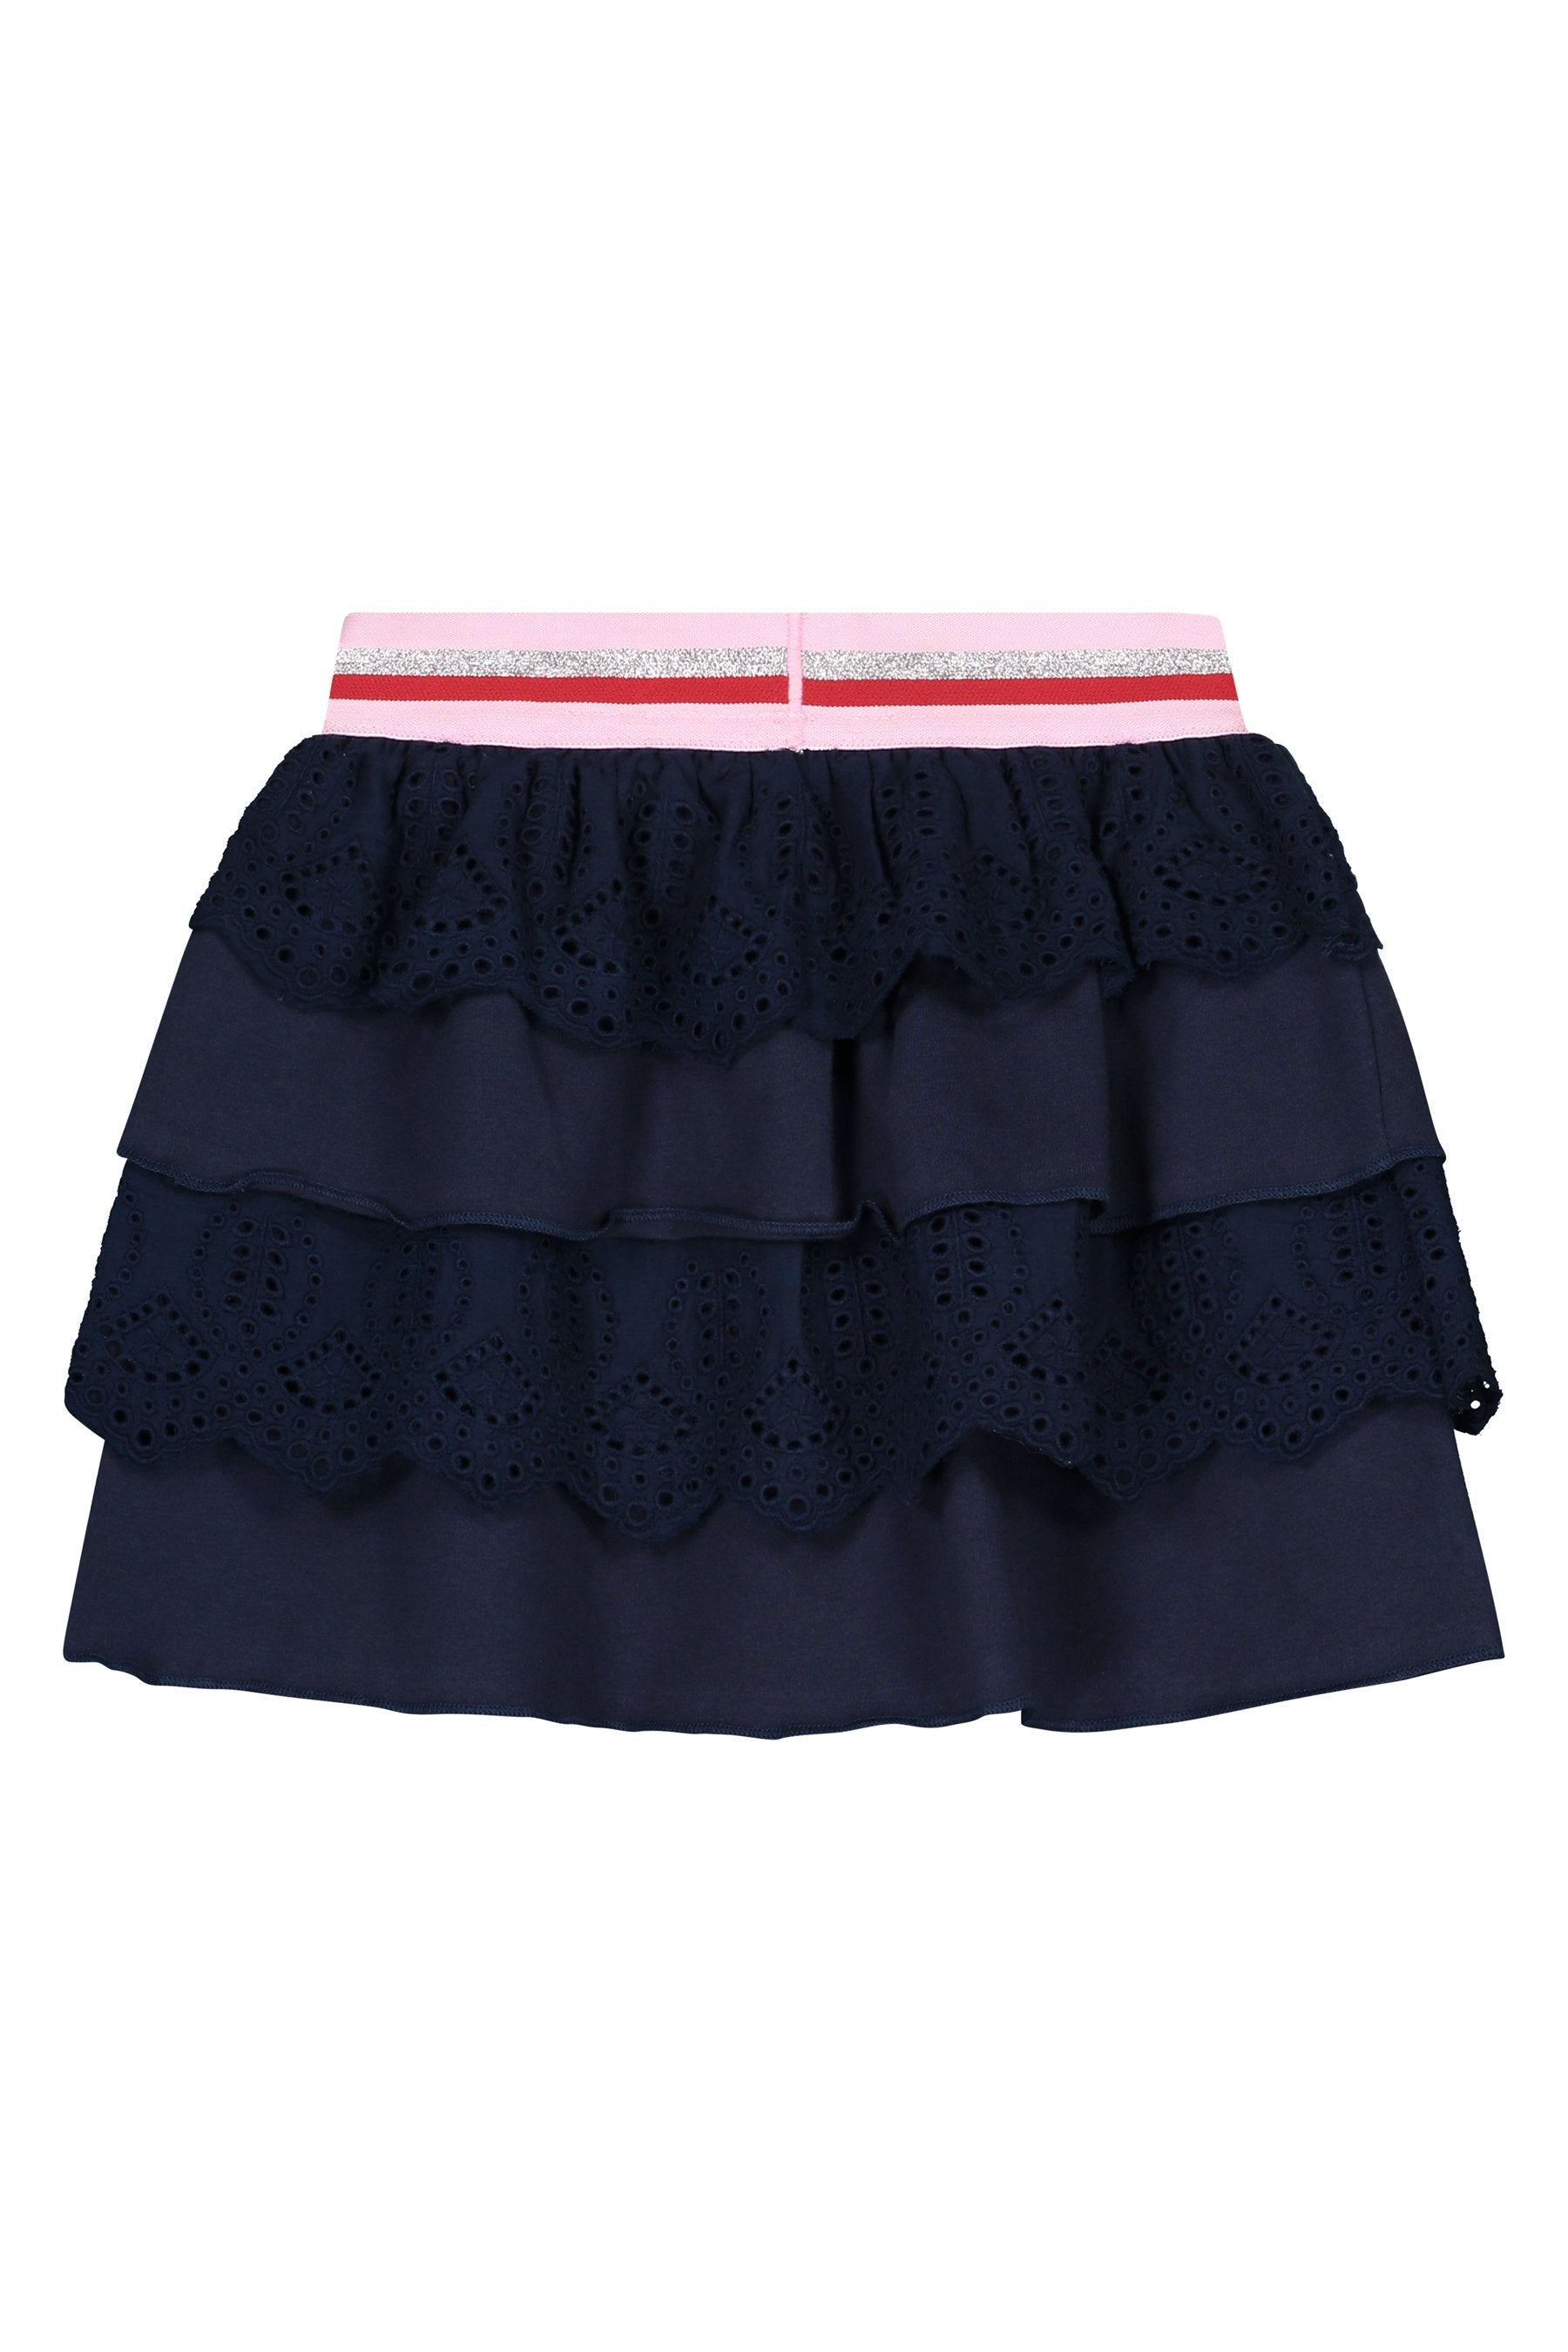 Quapi skirt Arina S202